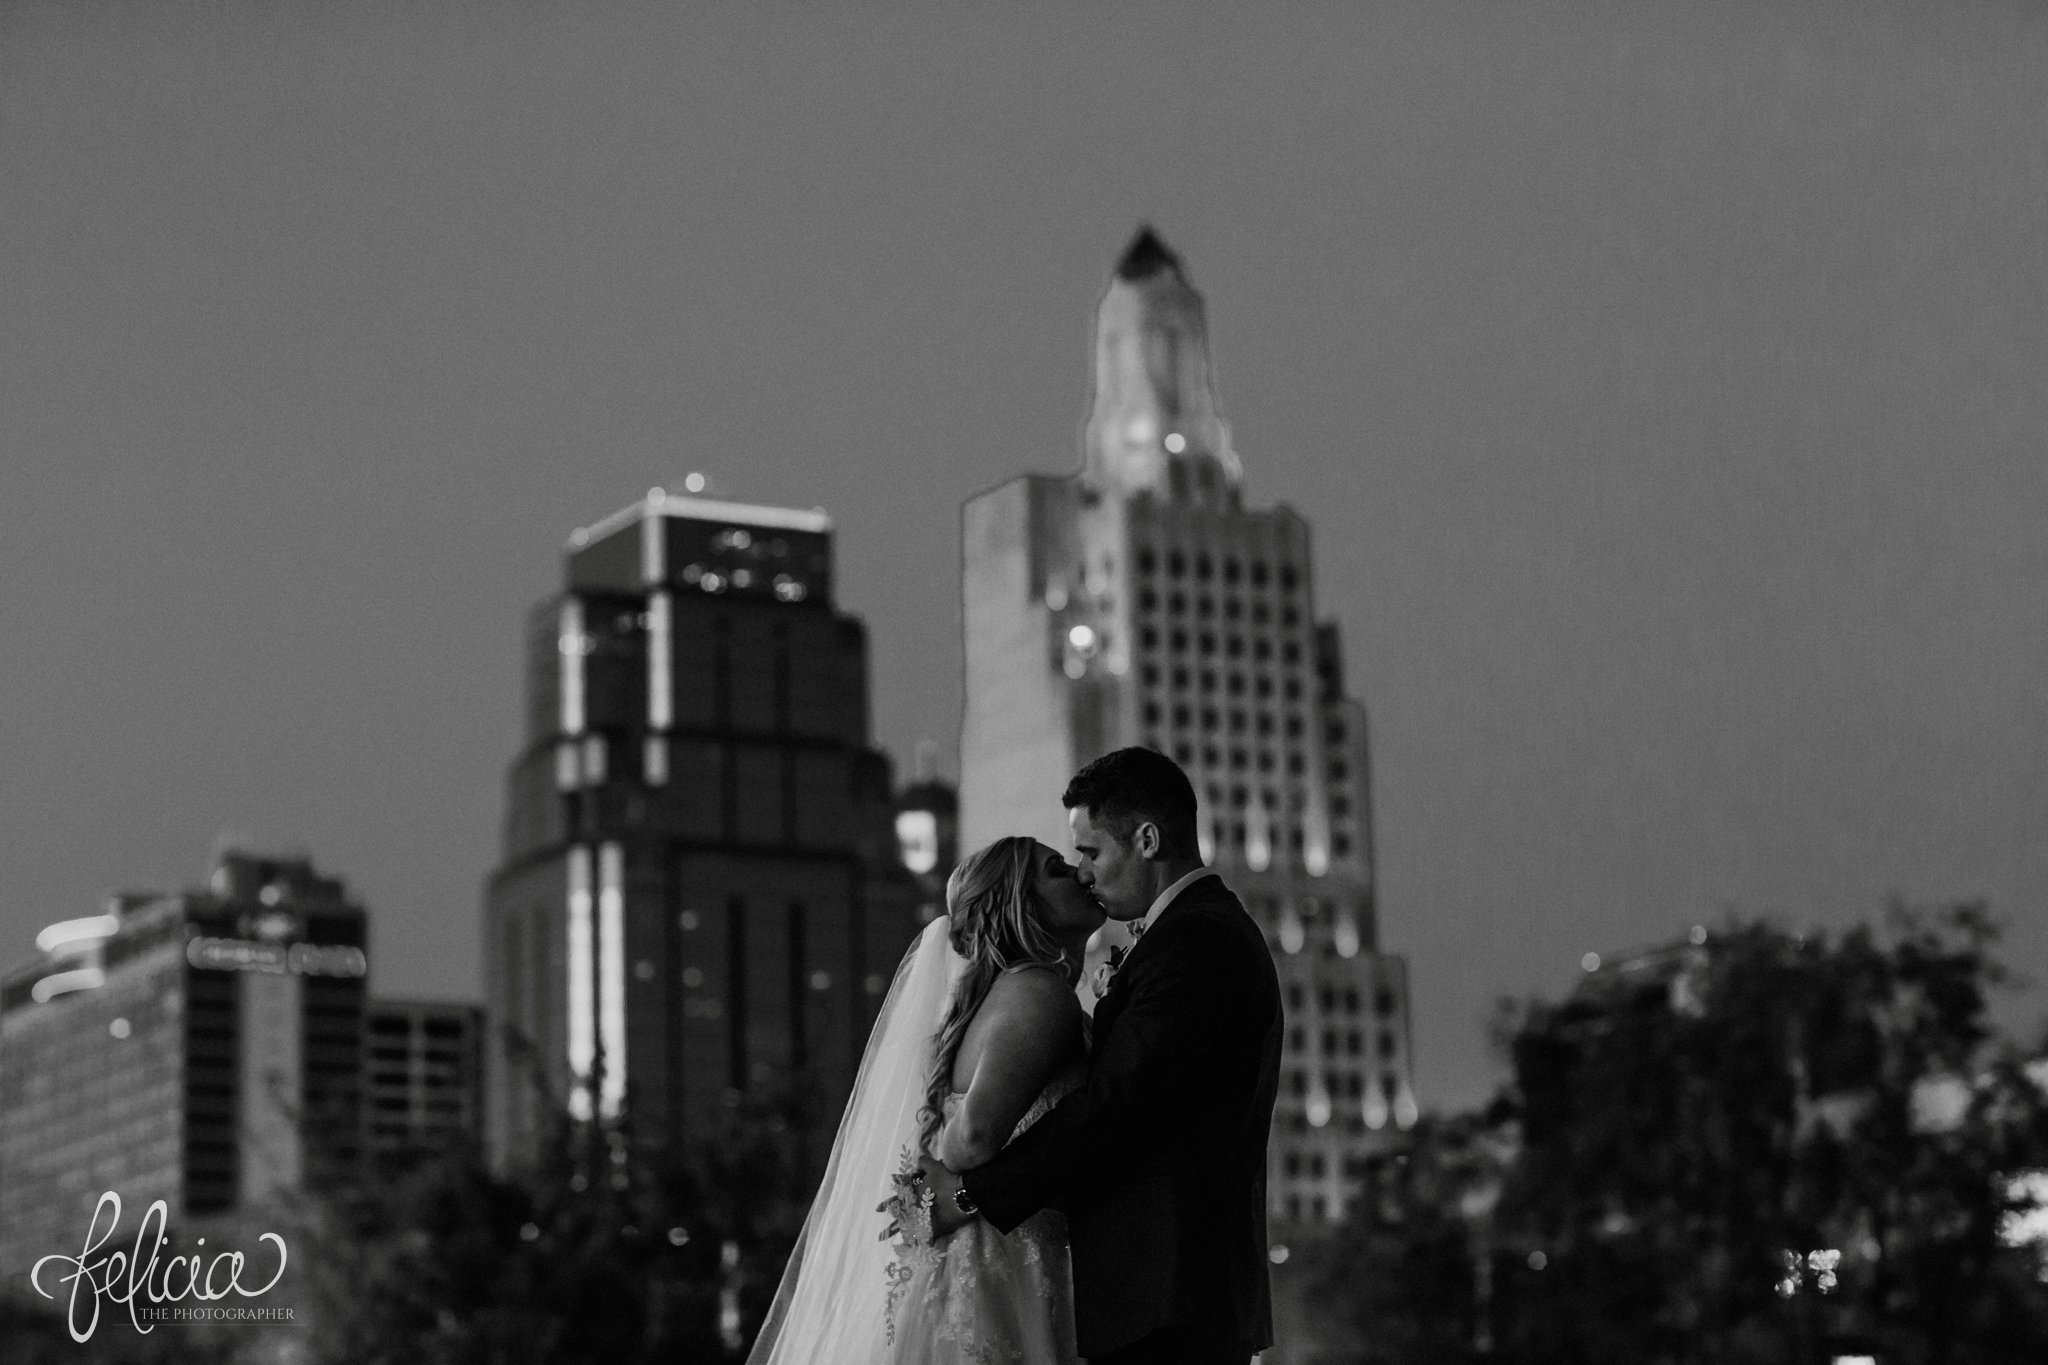 images by feliciathephotographer.com | wedding photographer | downtown kansas city | bride and groom portrait | black and white | kiss | skyline | nighttime | romantic | glamorous | 